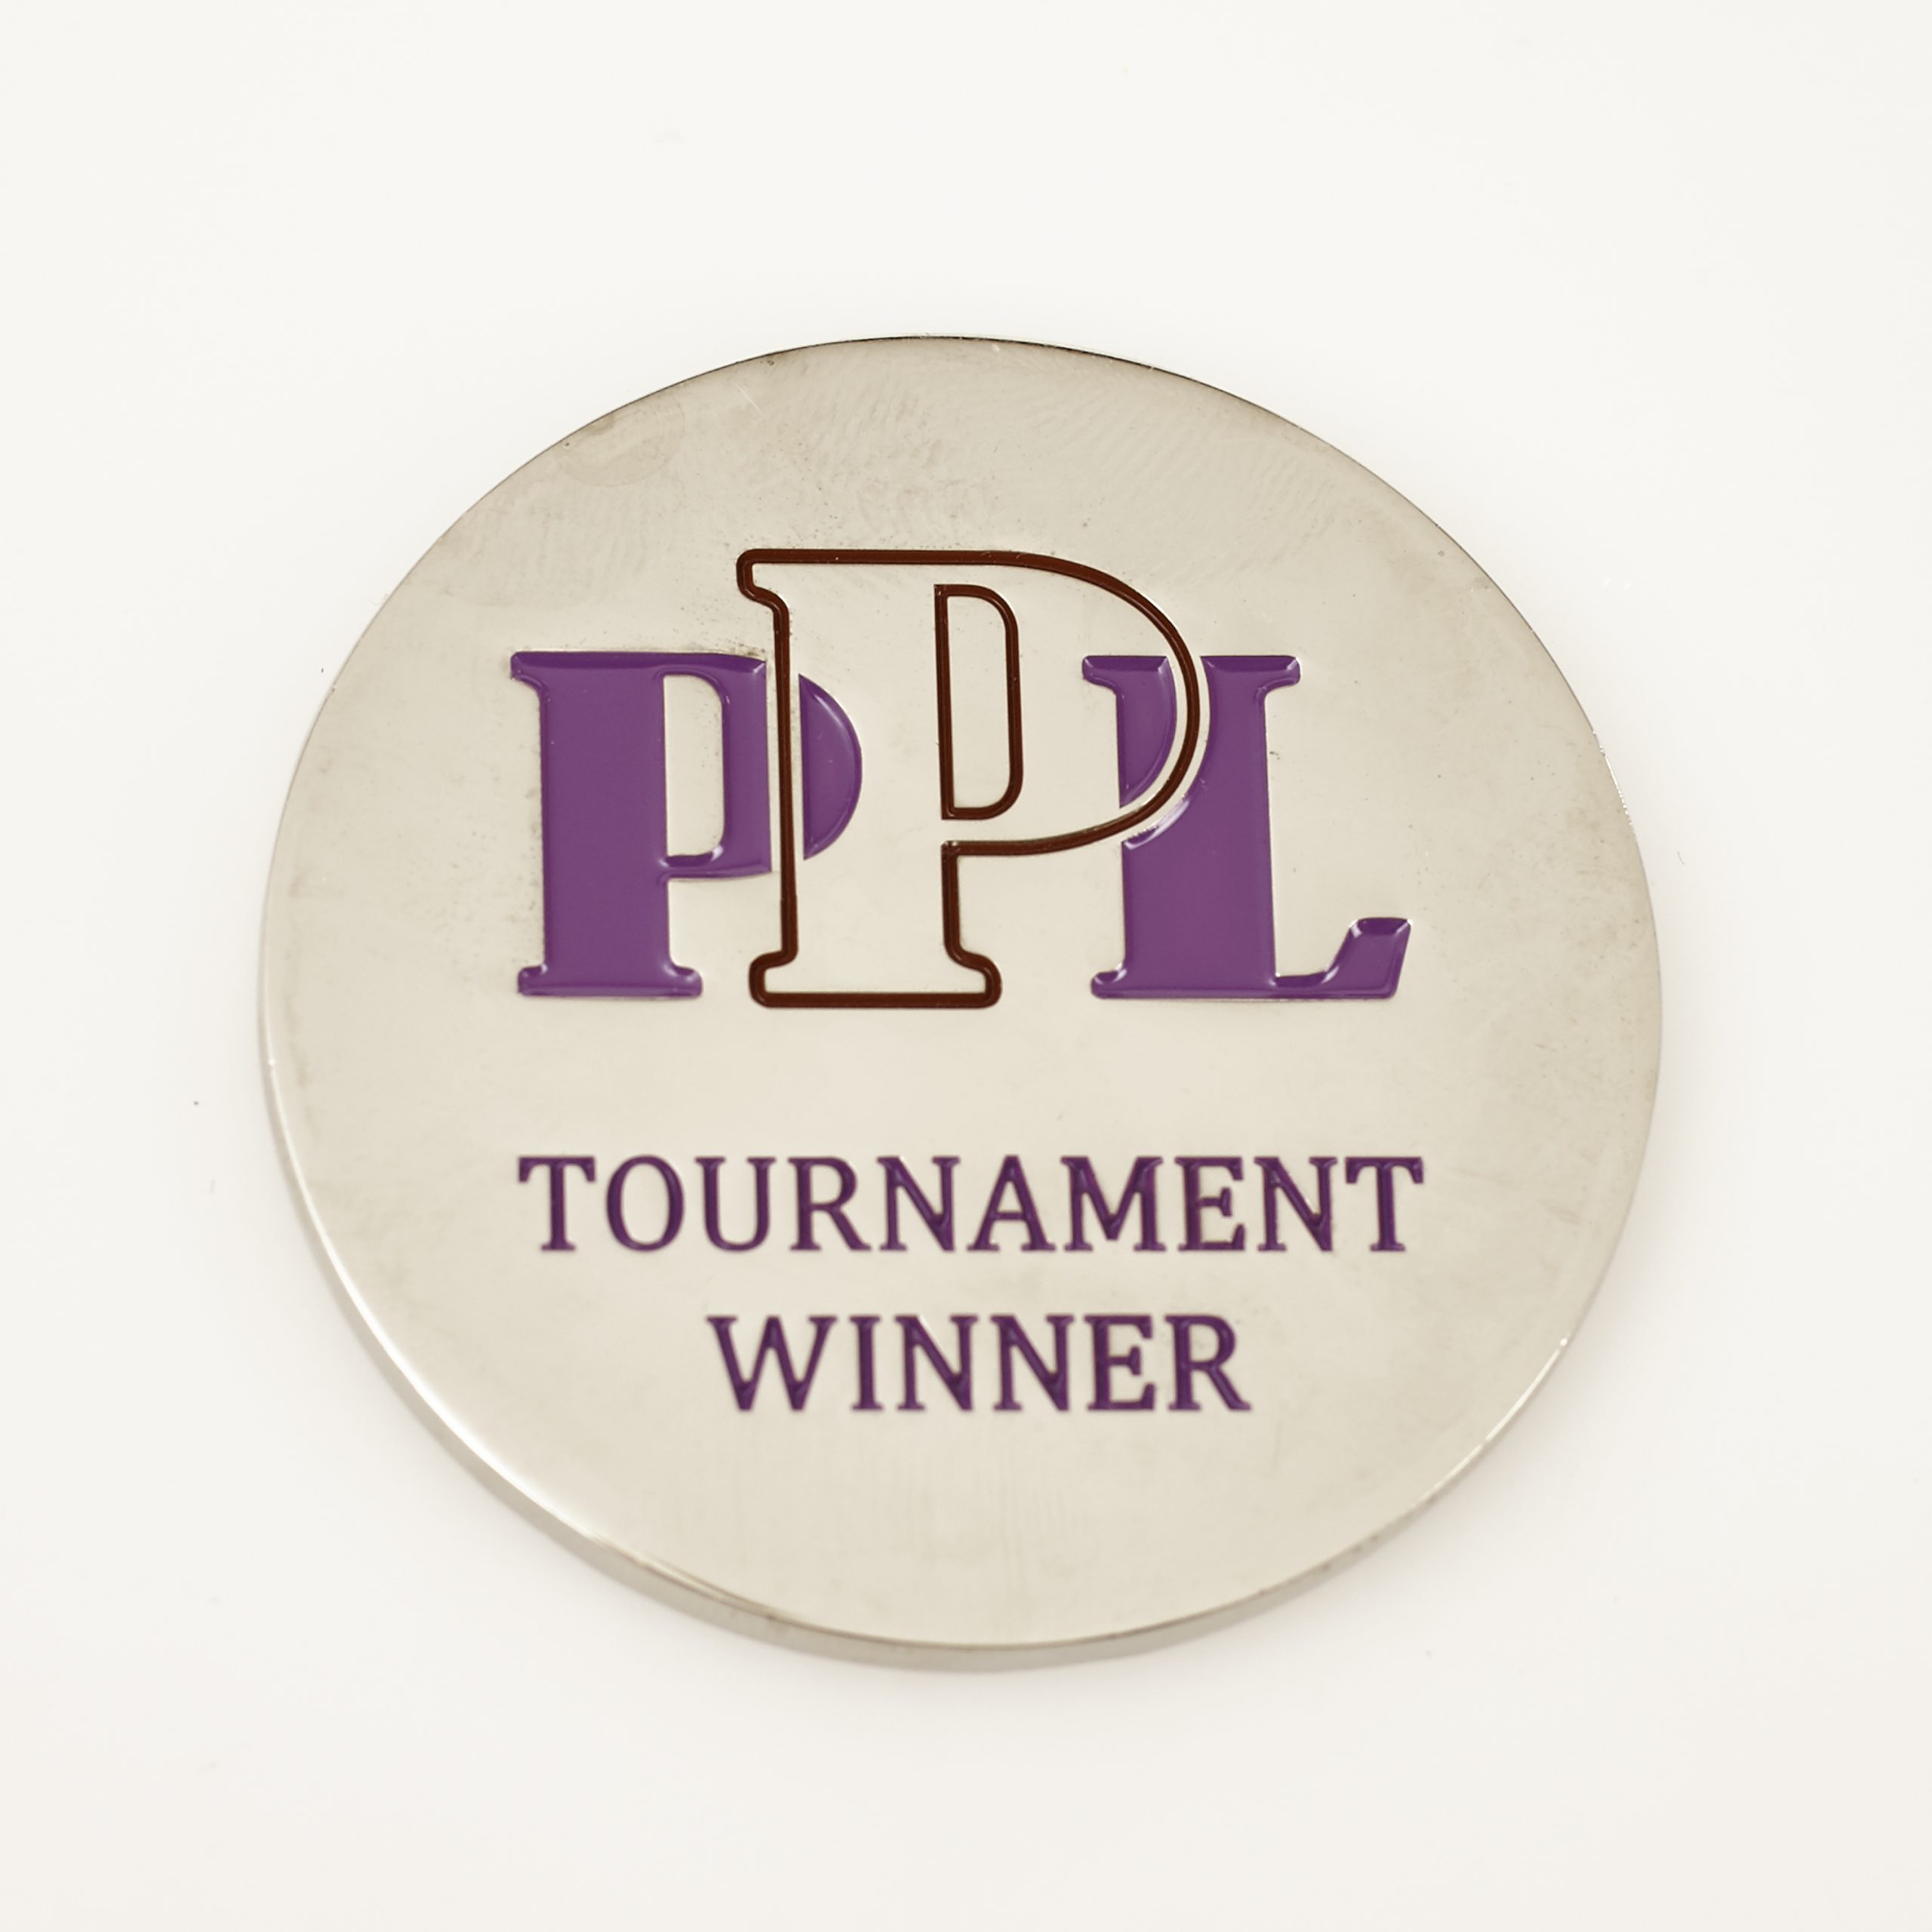 PERTH POKER LEAGUE PPL, TOURNAMENT WINNER (Purple), Poker Card Guard